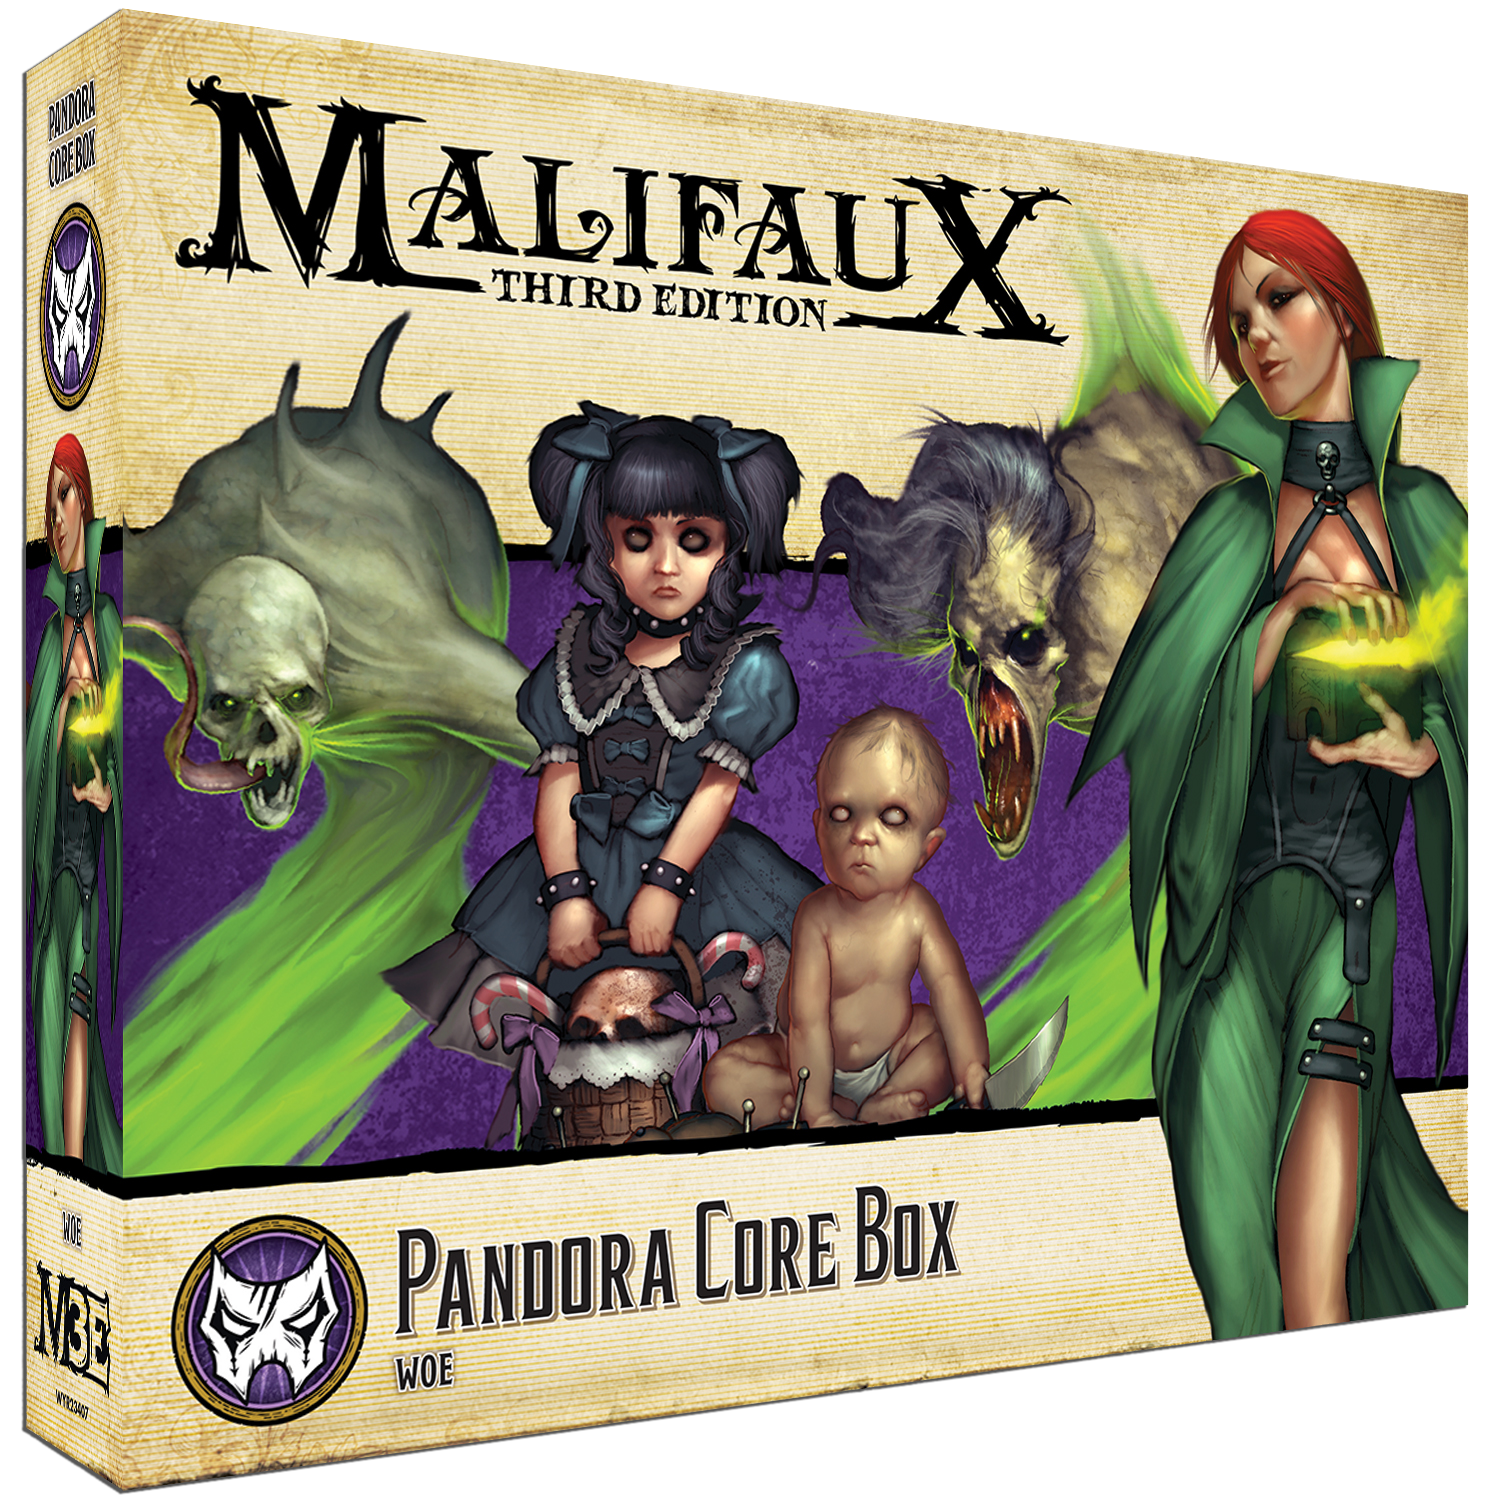 pandora core box front of box